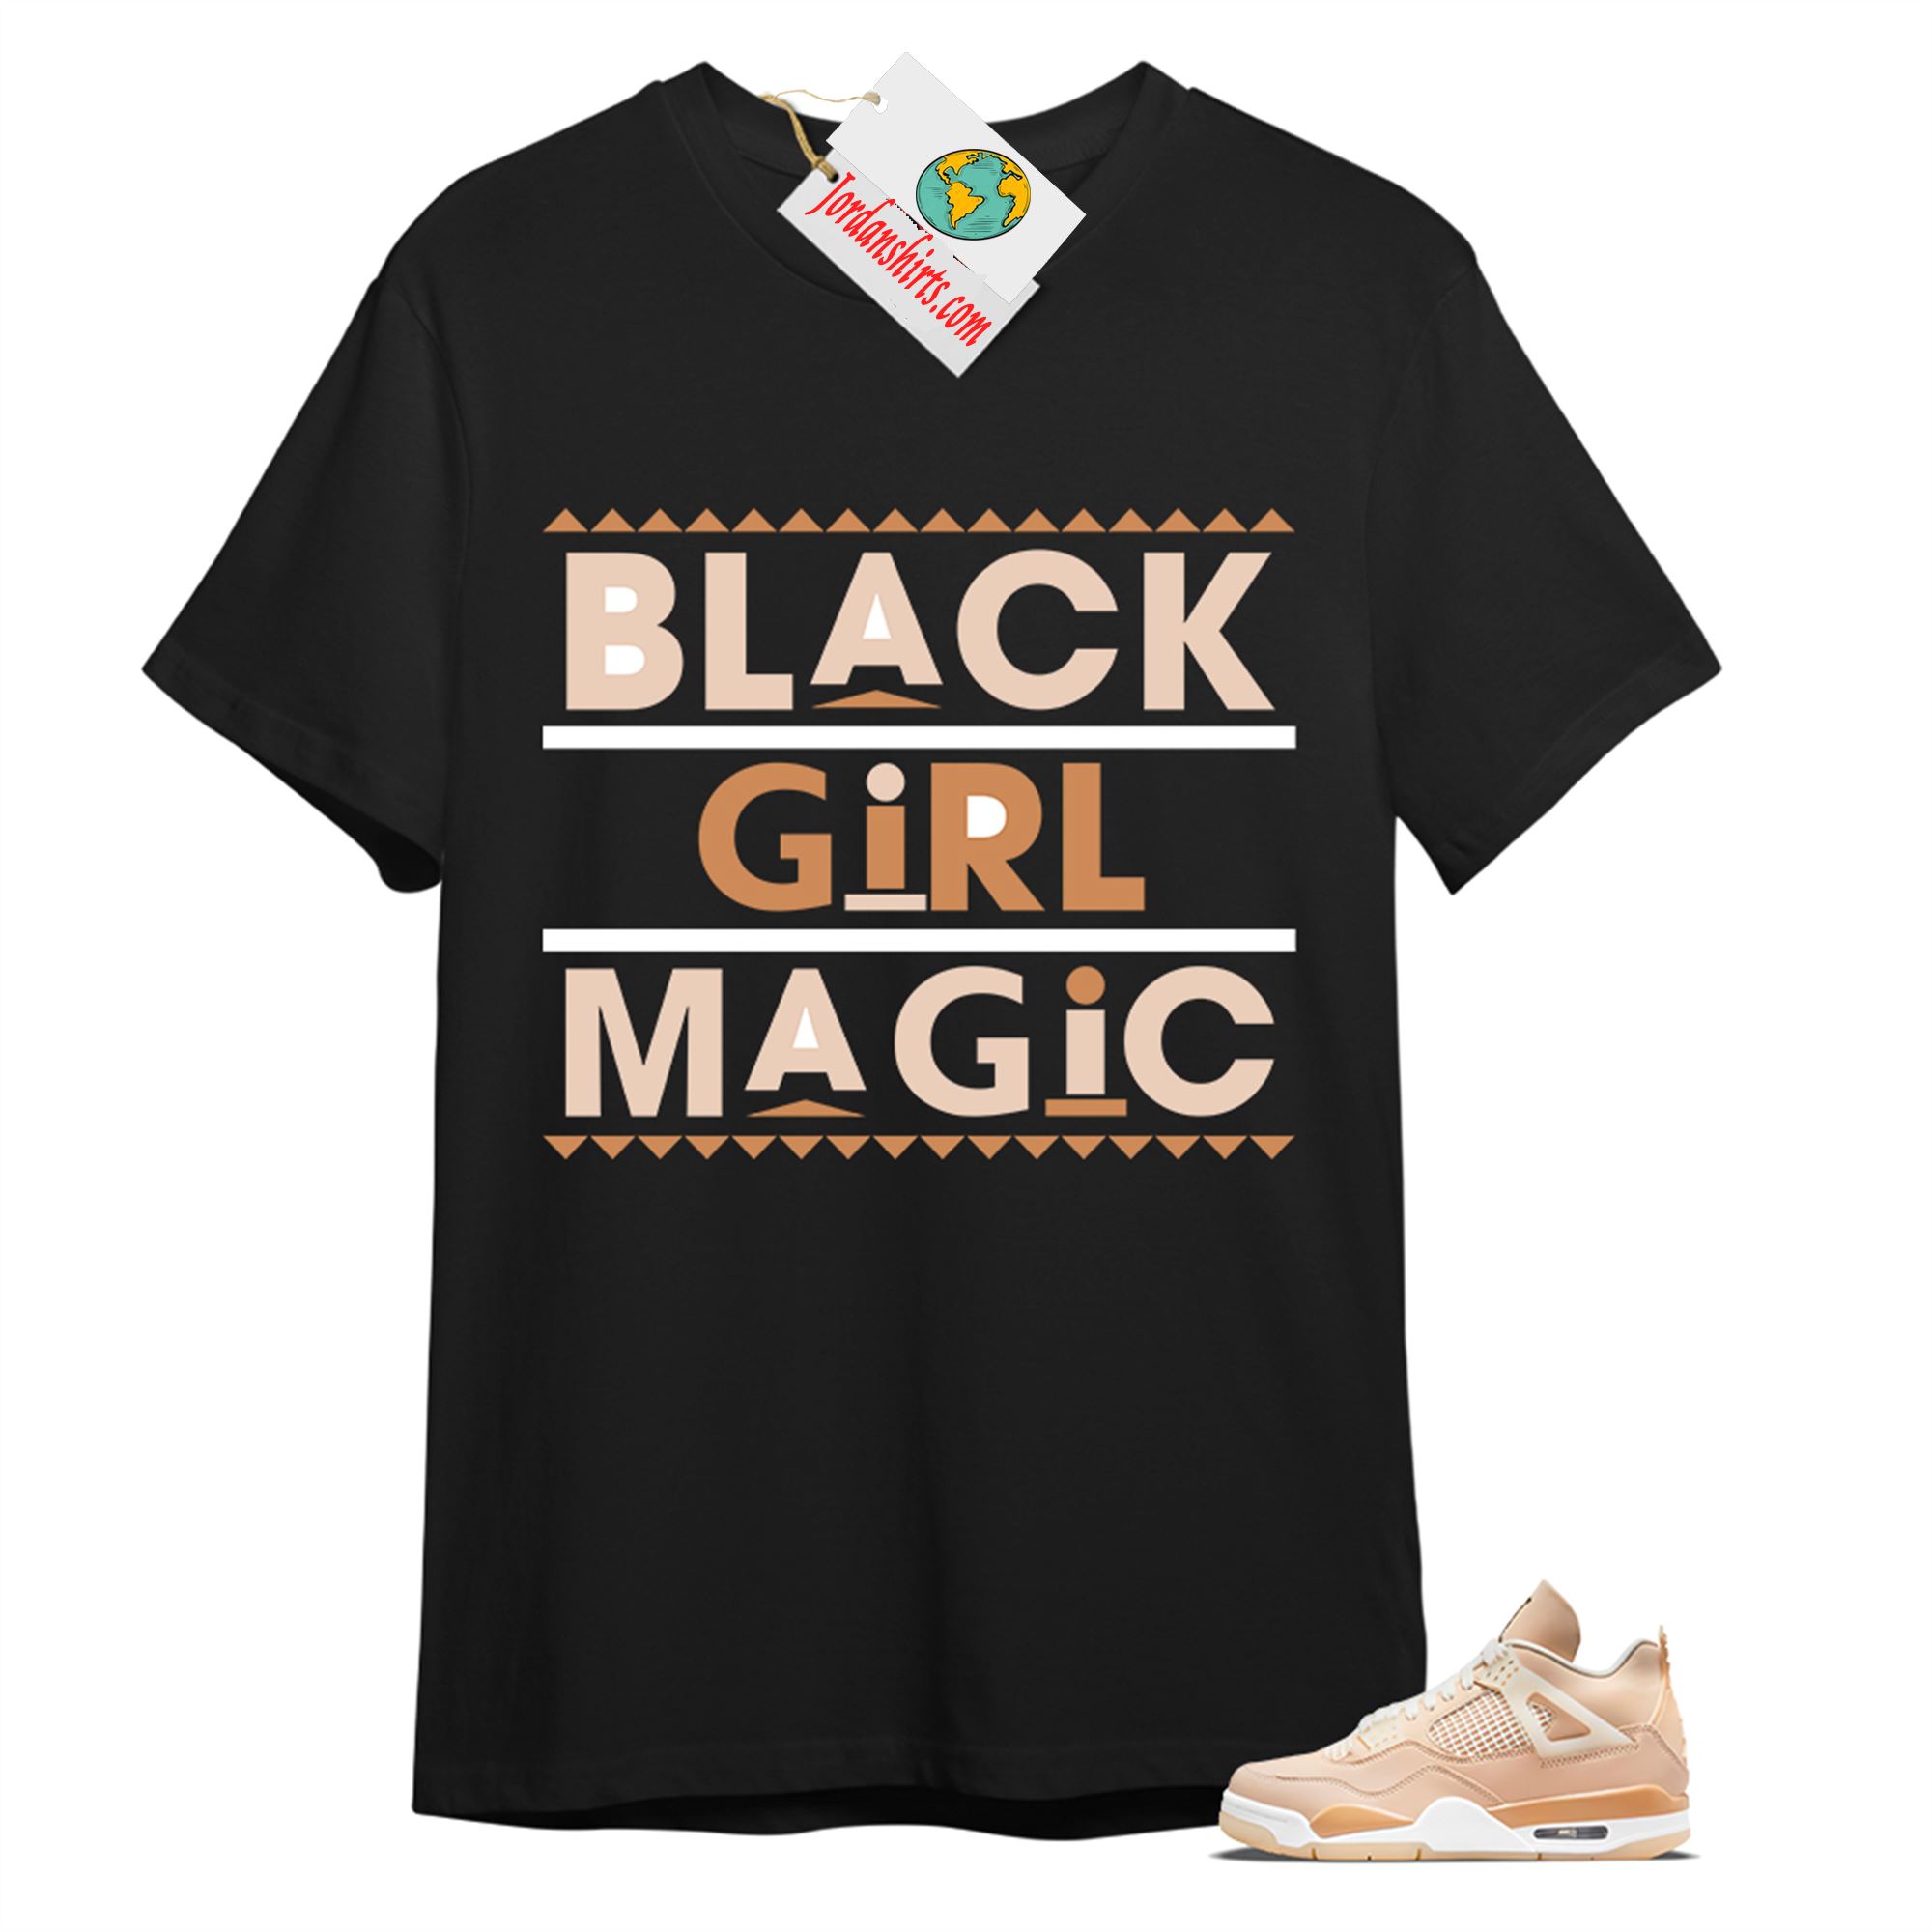 Jordan 4 Shirt, Black Girl Magic Black T-shirt Air Jordan 4 Shimmer 4s Full Size Up To 5xl